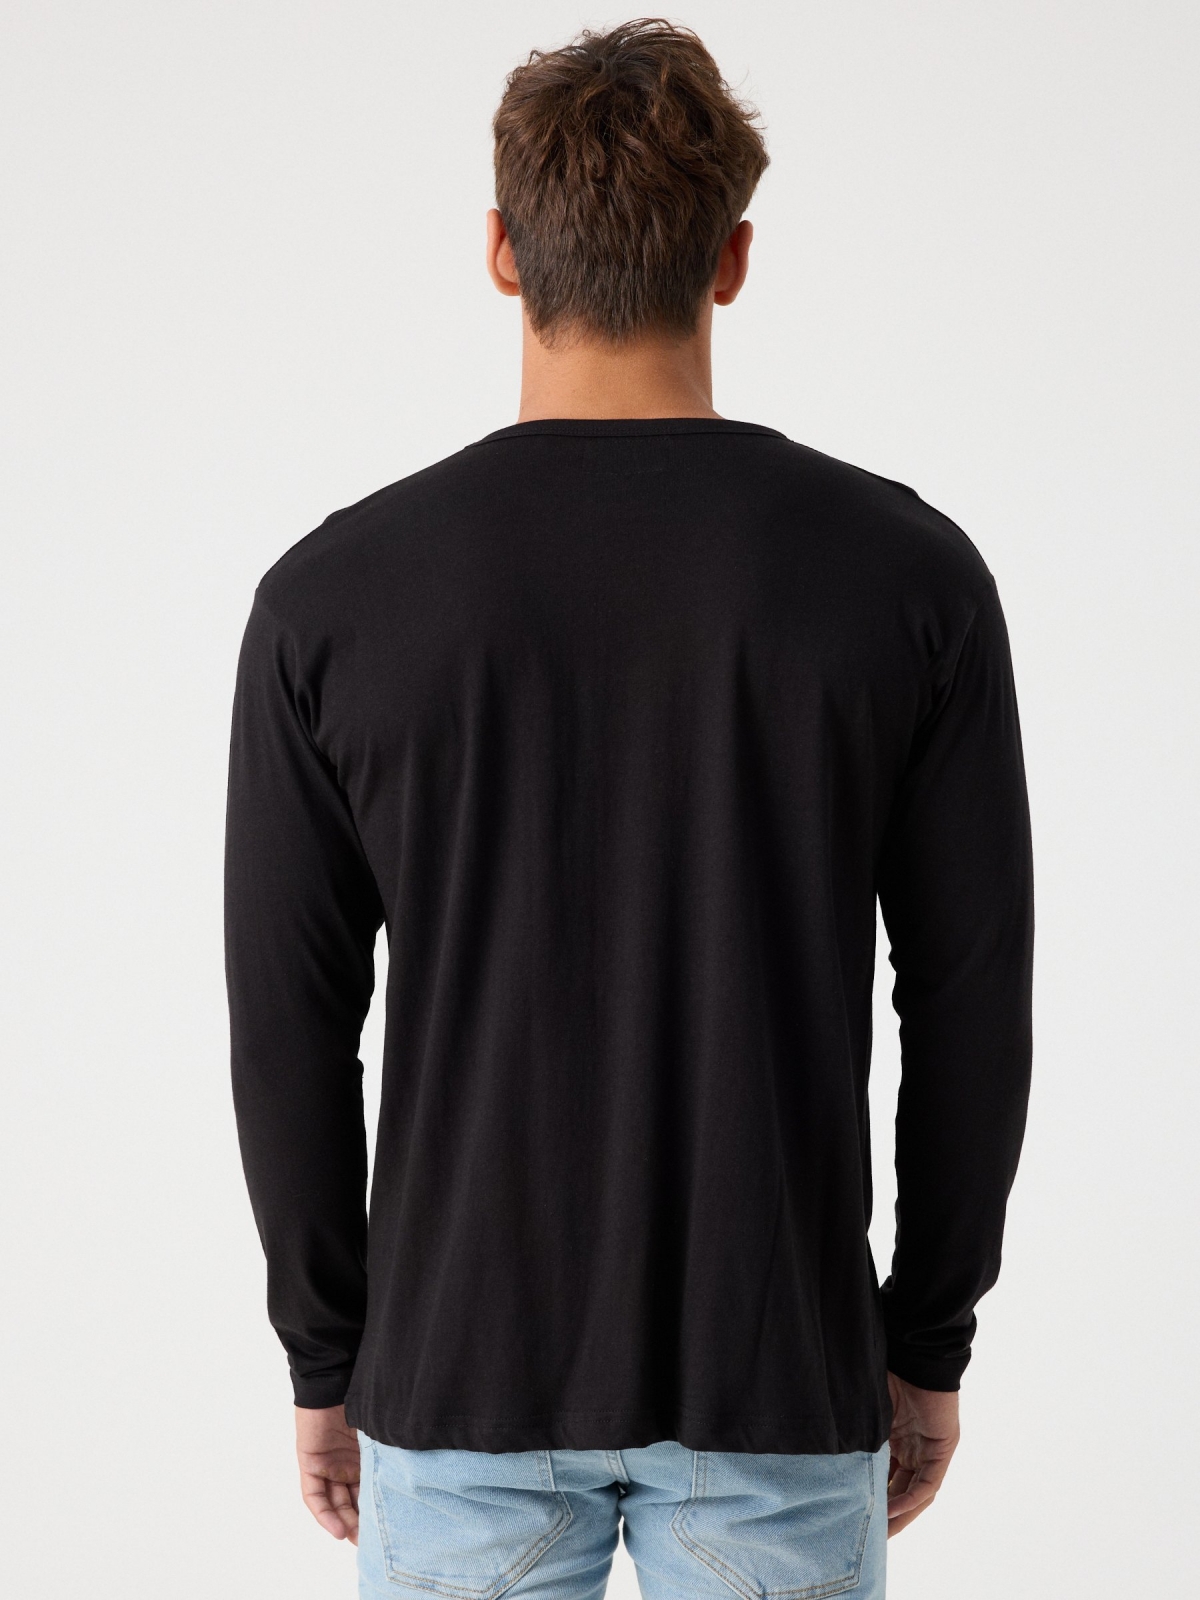 Camiseta básica manga larga negro vista media trasera